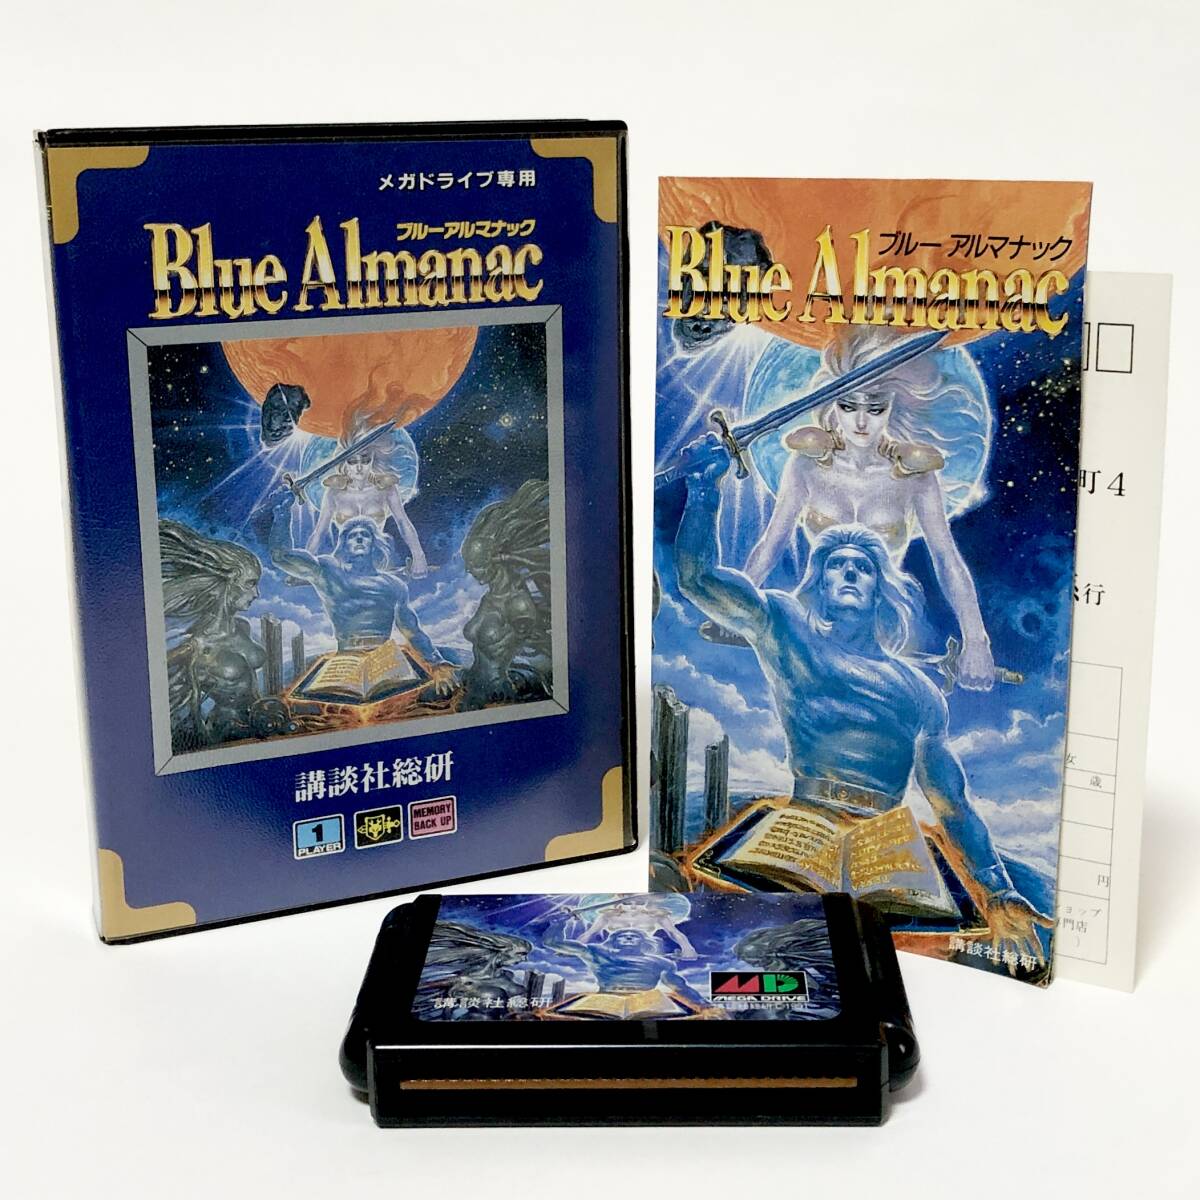  Sega Mega Drive blue arumanak box opinion attaching pain equipped .. company total . retro game Sega Mega Drive Blue Almanac CIB Tested